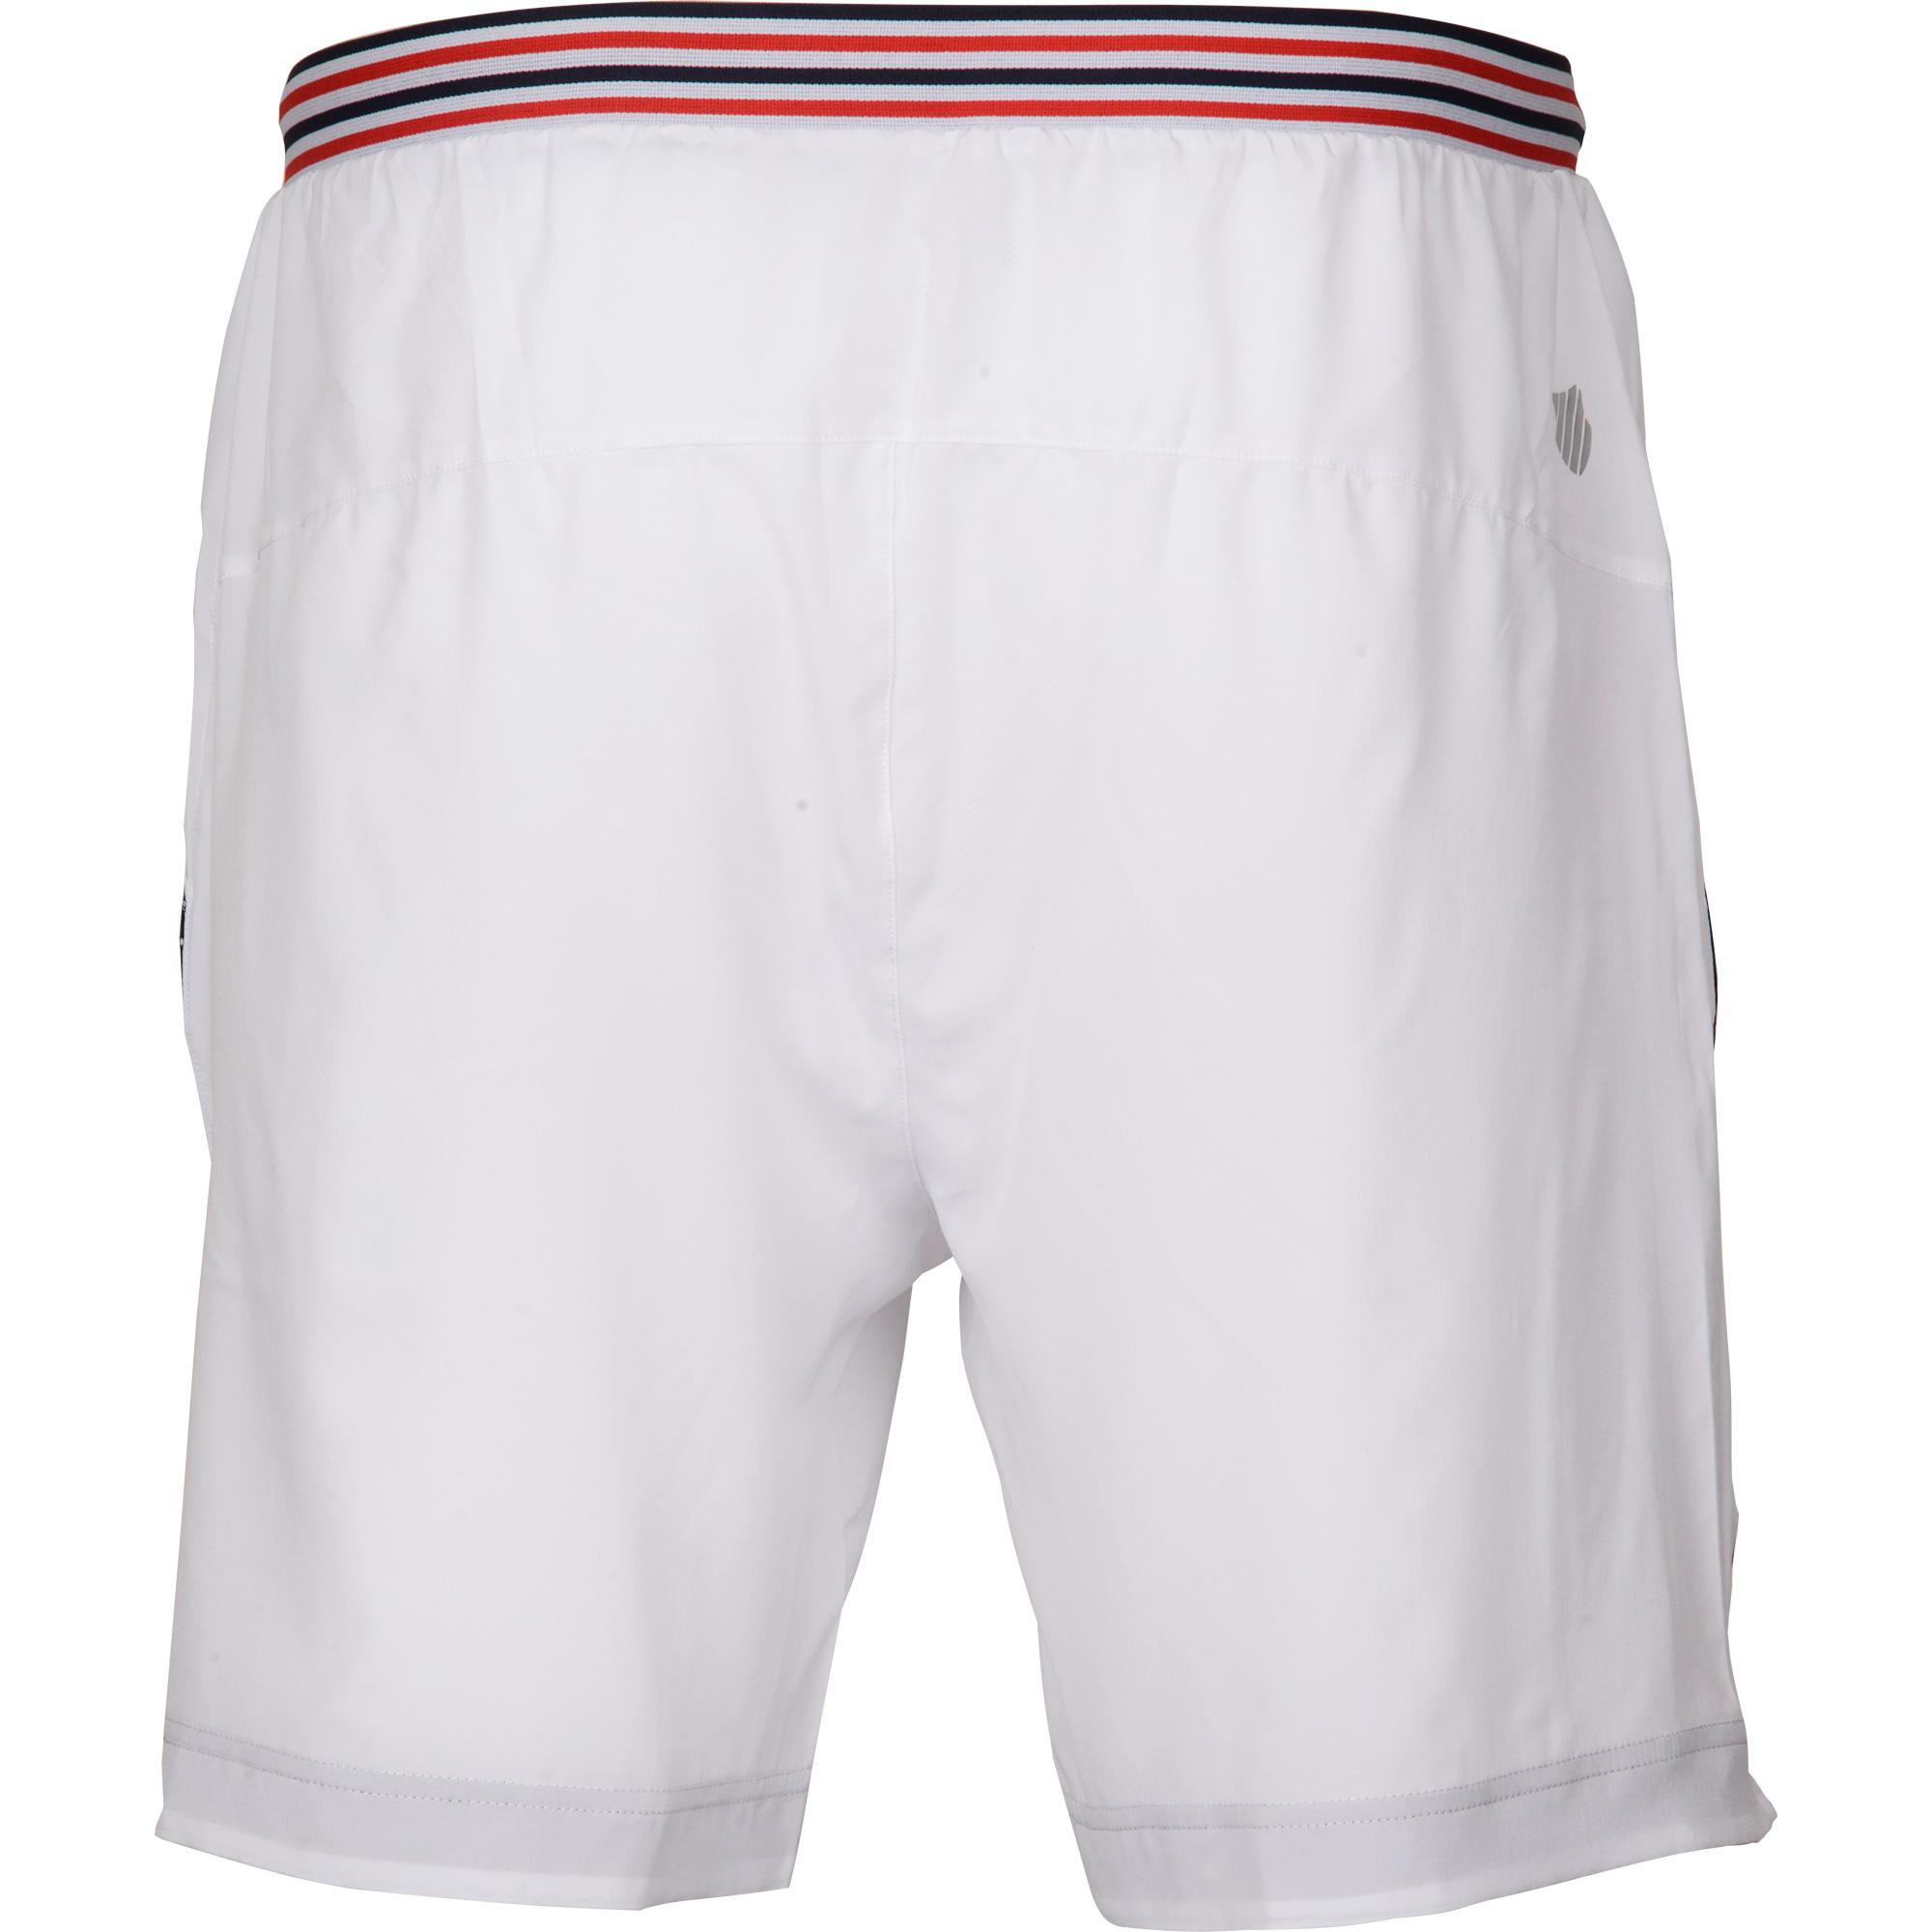 K-Swiss Mens Heritage Shorts - White - Tennisnuts.com